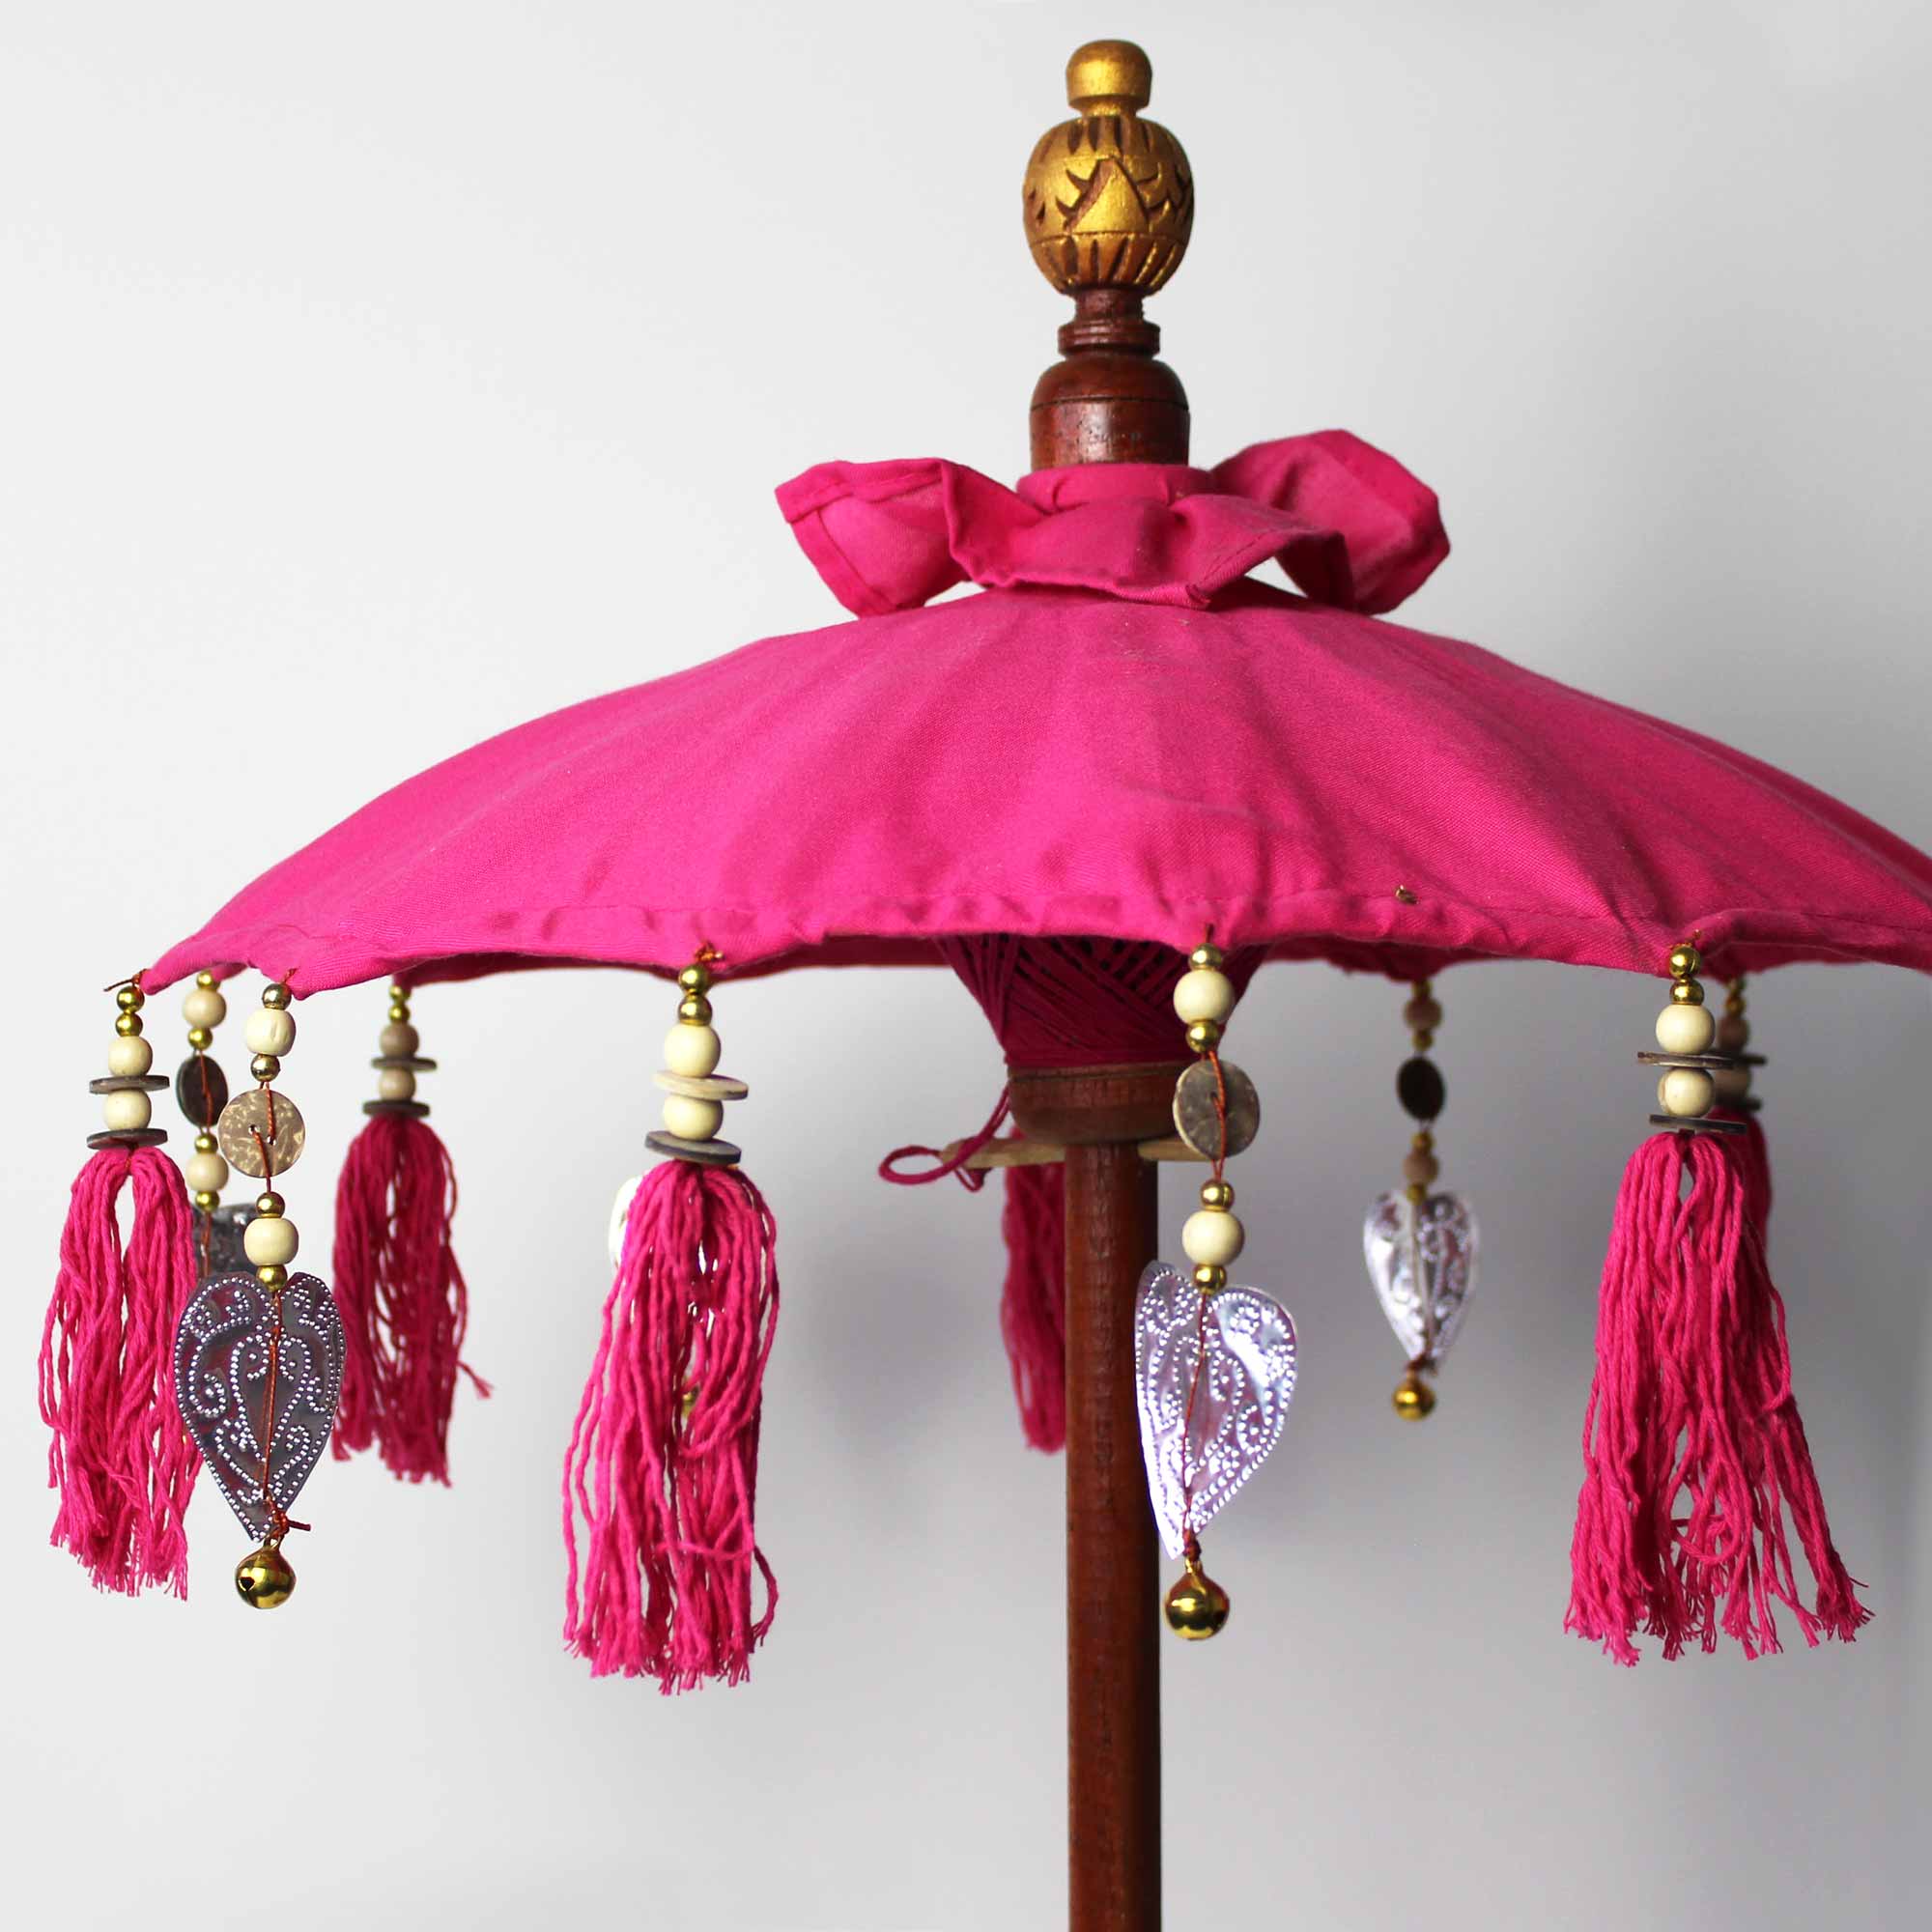 Bali Home Decor Parasol - Cotton - Pink- 40cm